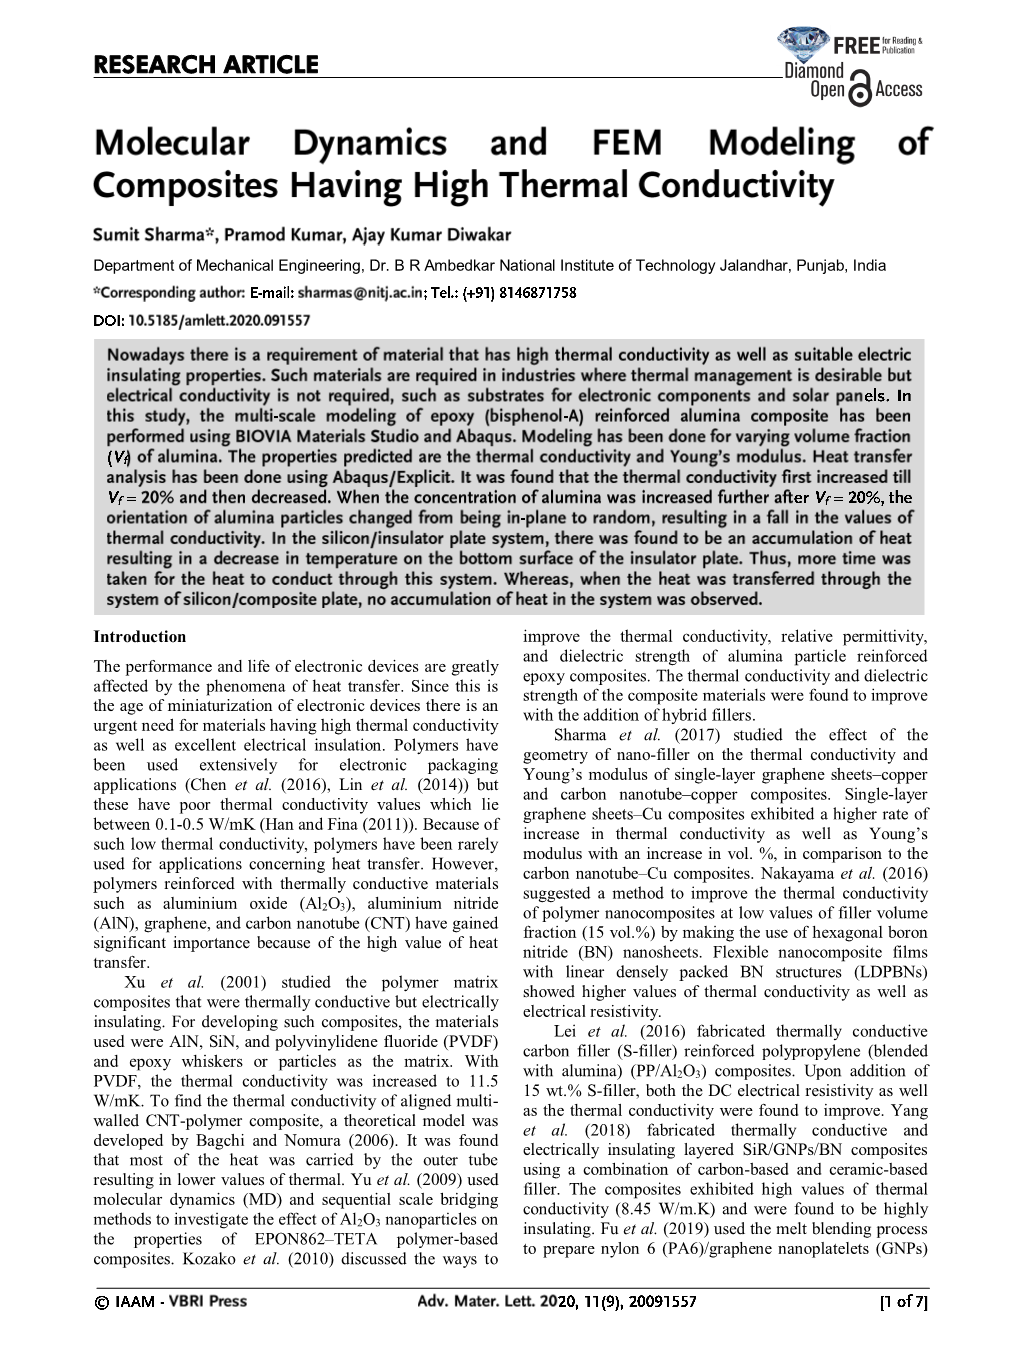 Molecular Dynamics and FEM Modeling of Composites Having